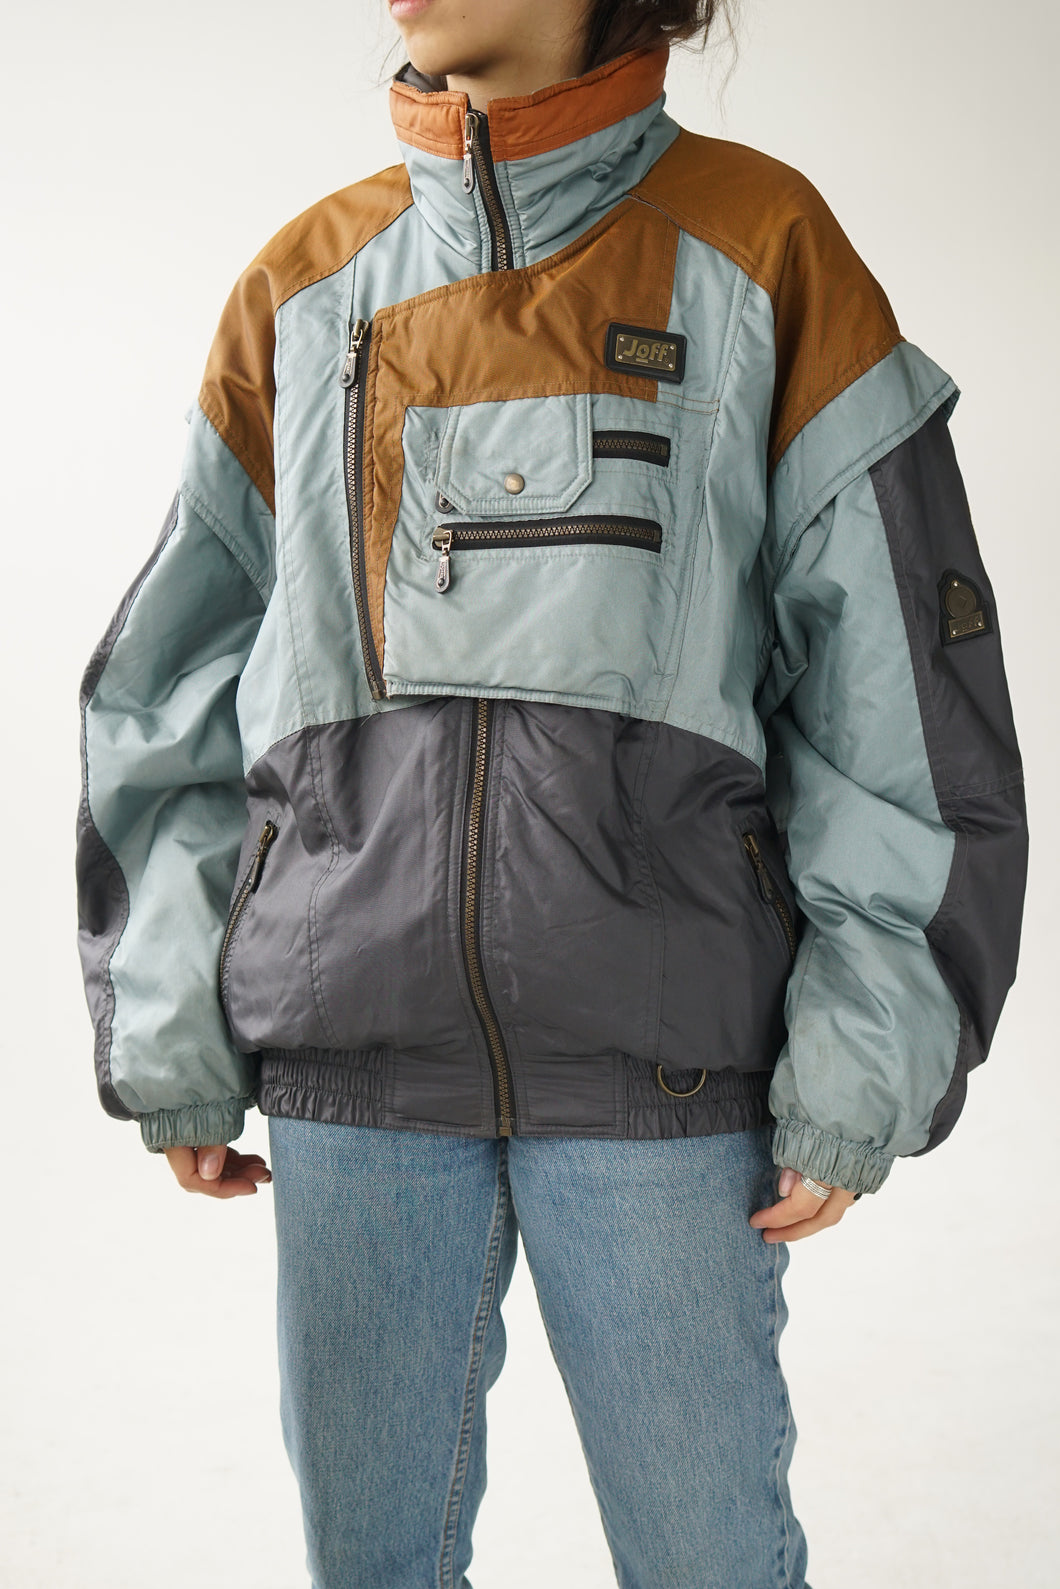 Joff ski jacket for men size 42